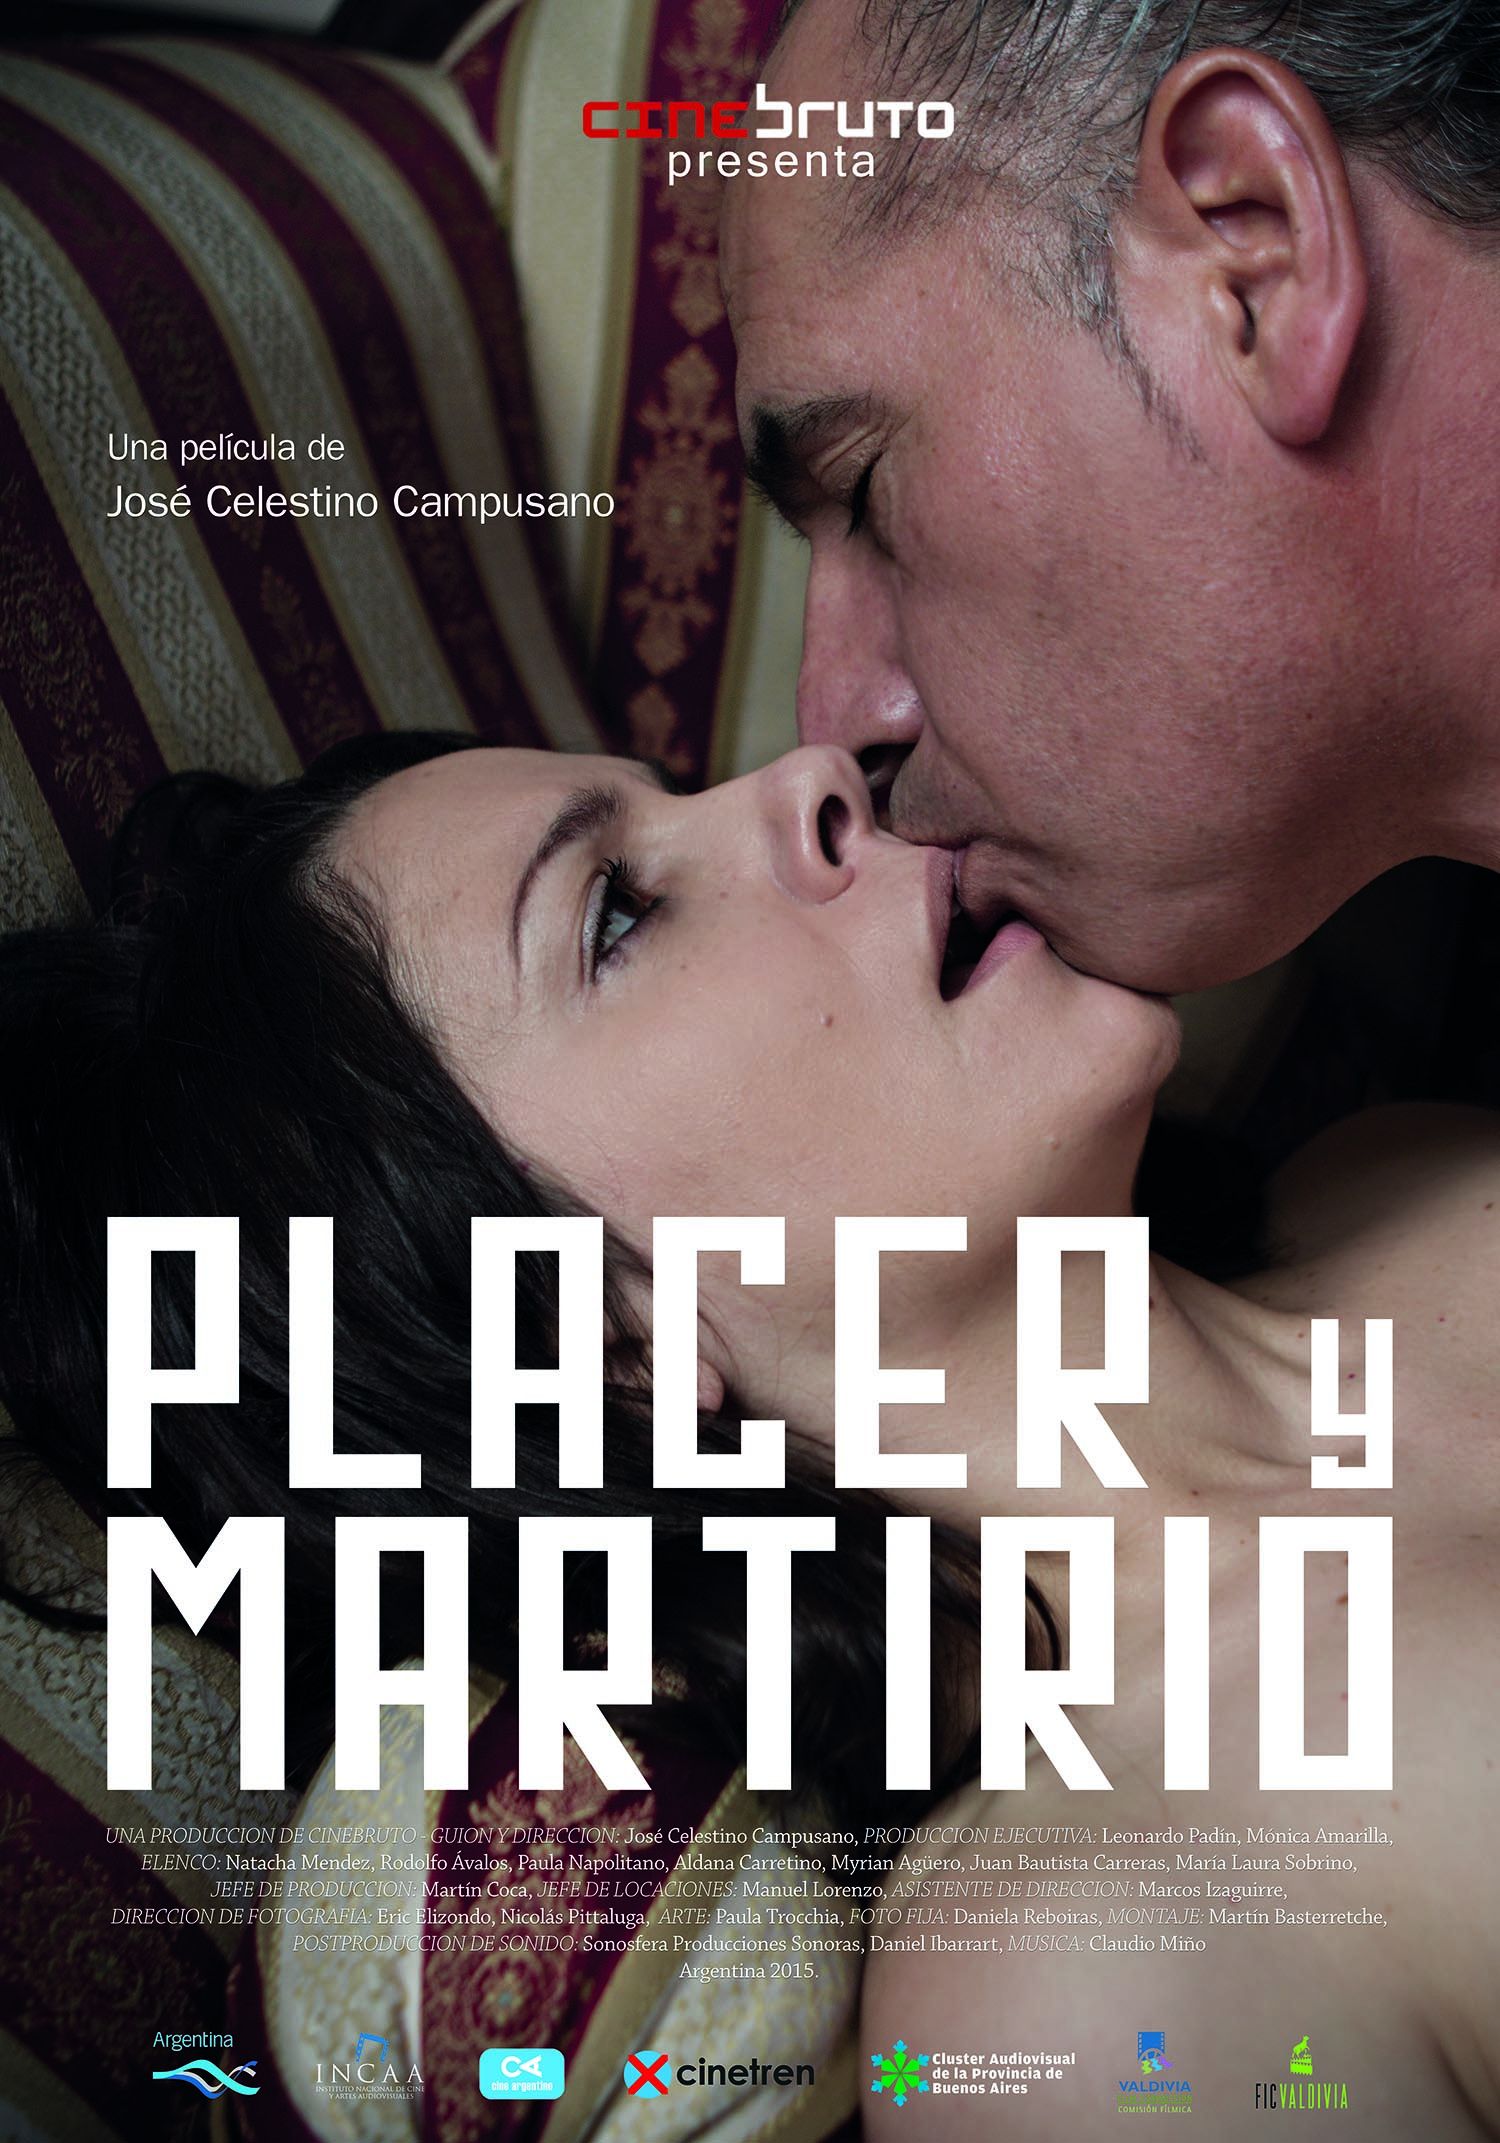 [18+] Martyrdom and Pleasure (2015) Spanish HDRip download full movie